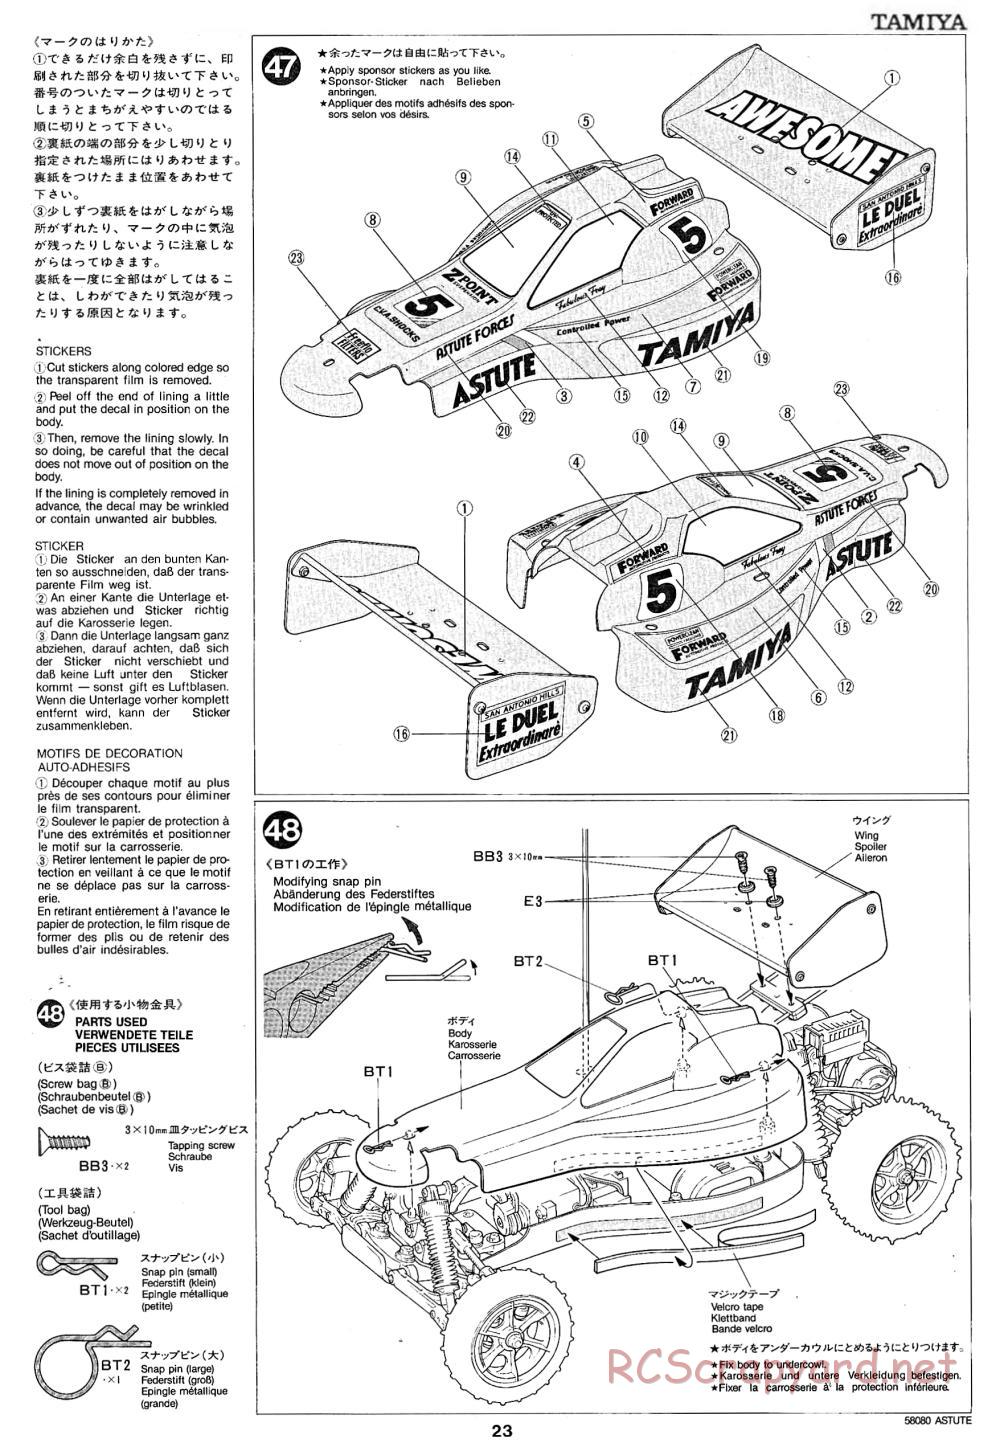 Tamiya - Astute - 58080 - Manual - Page 23